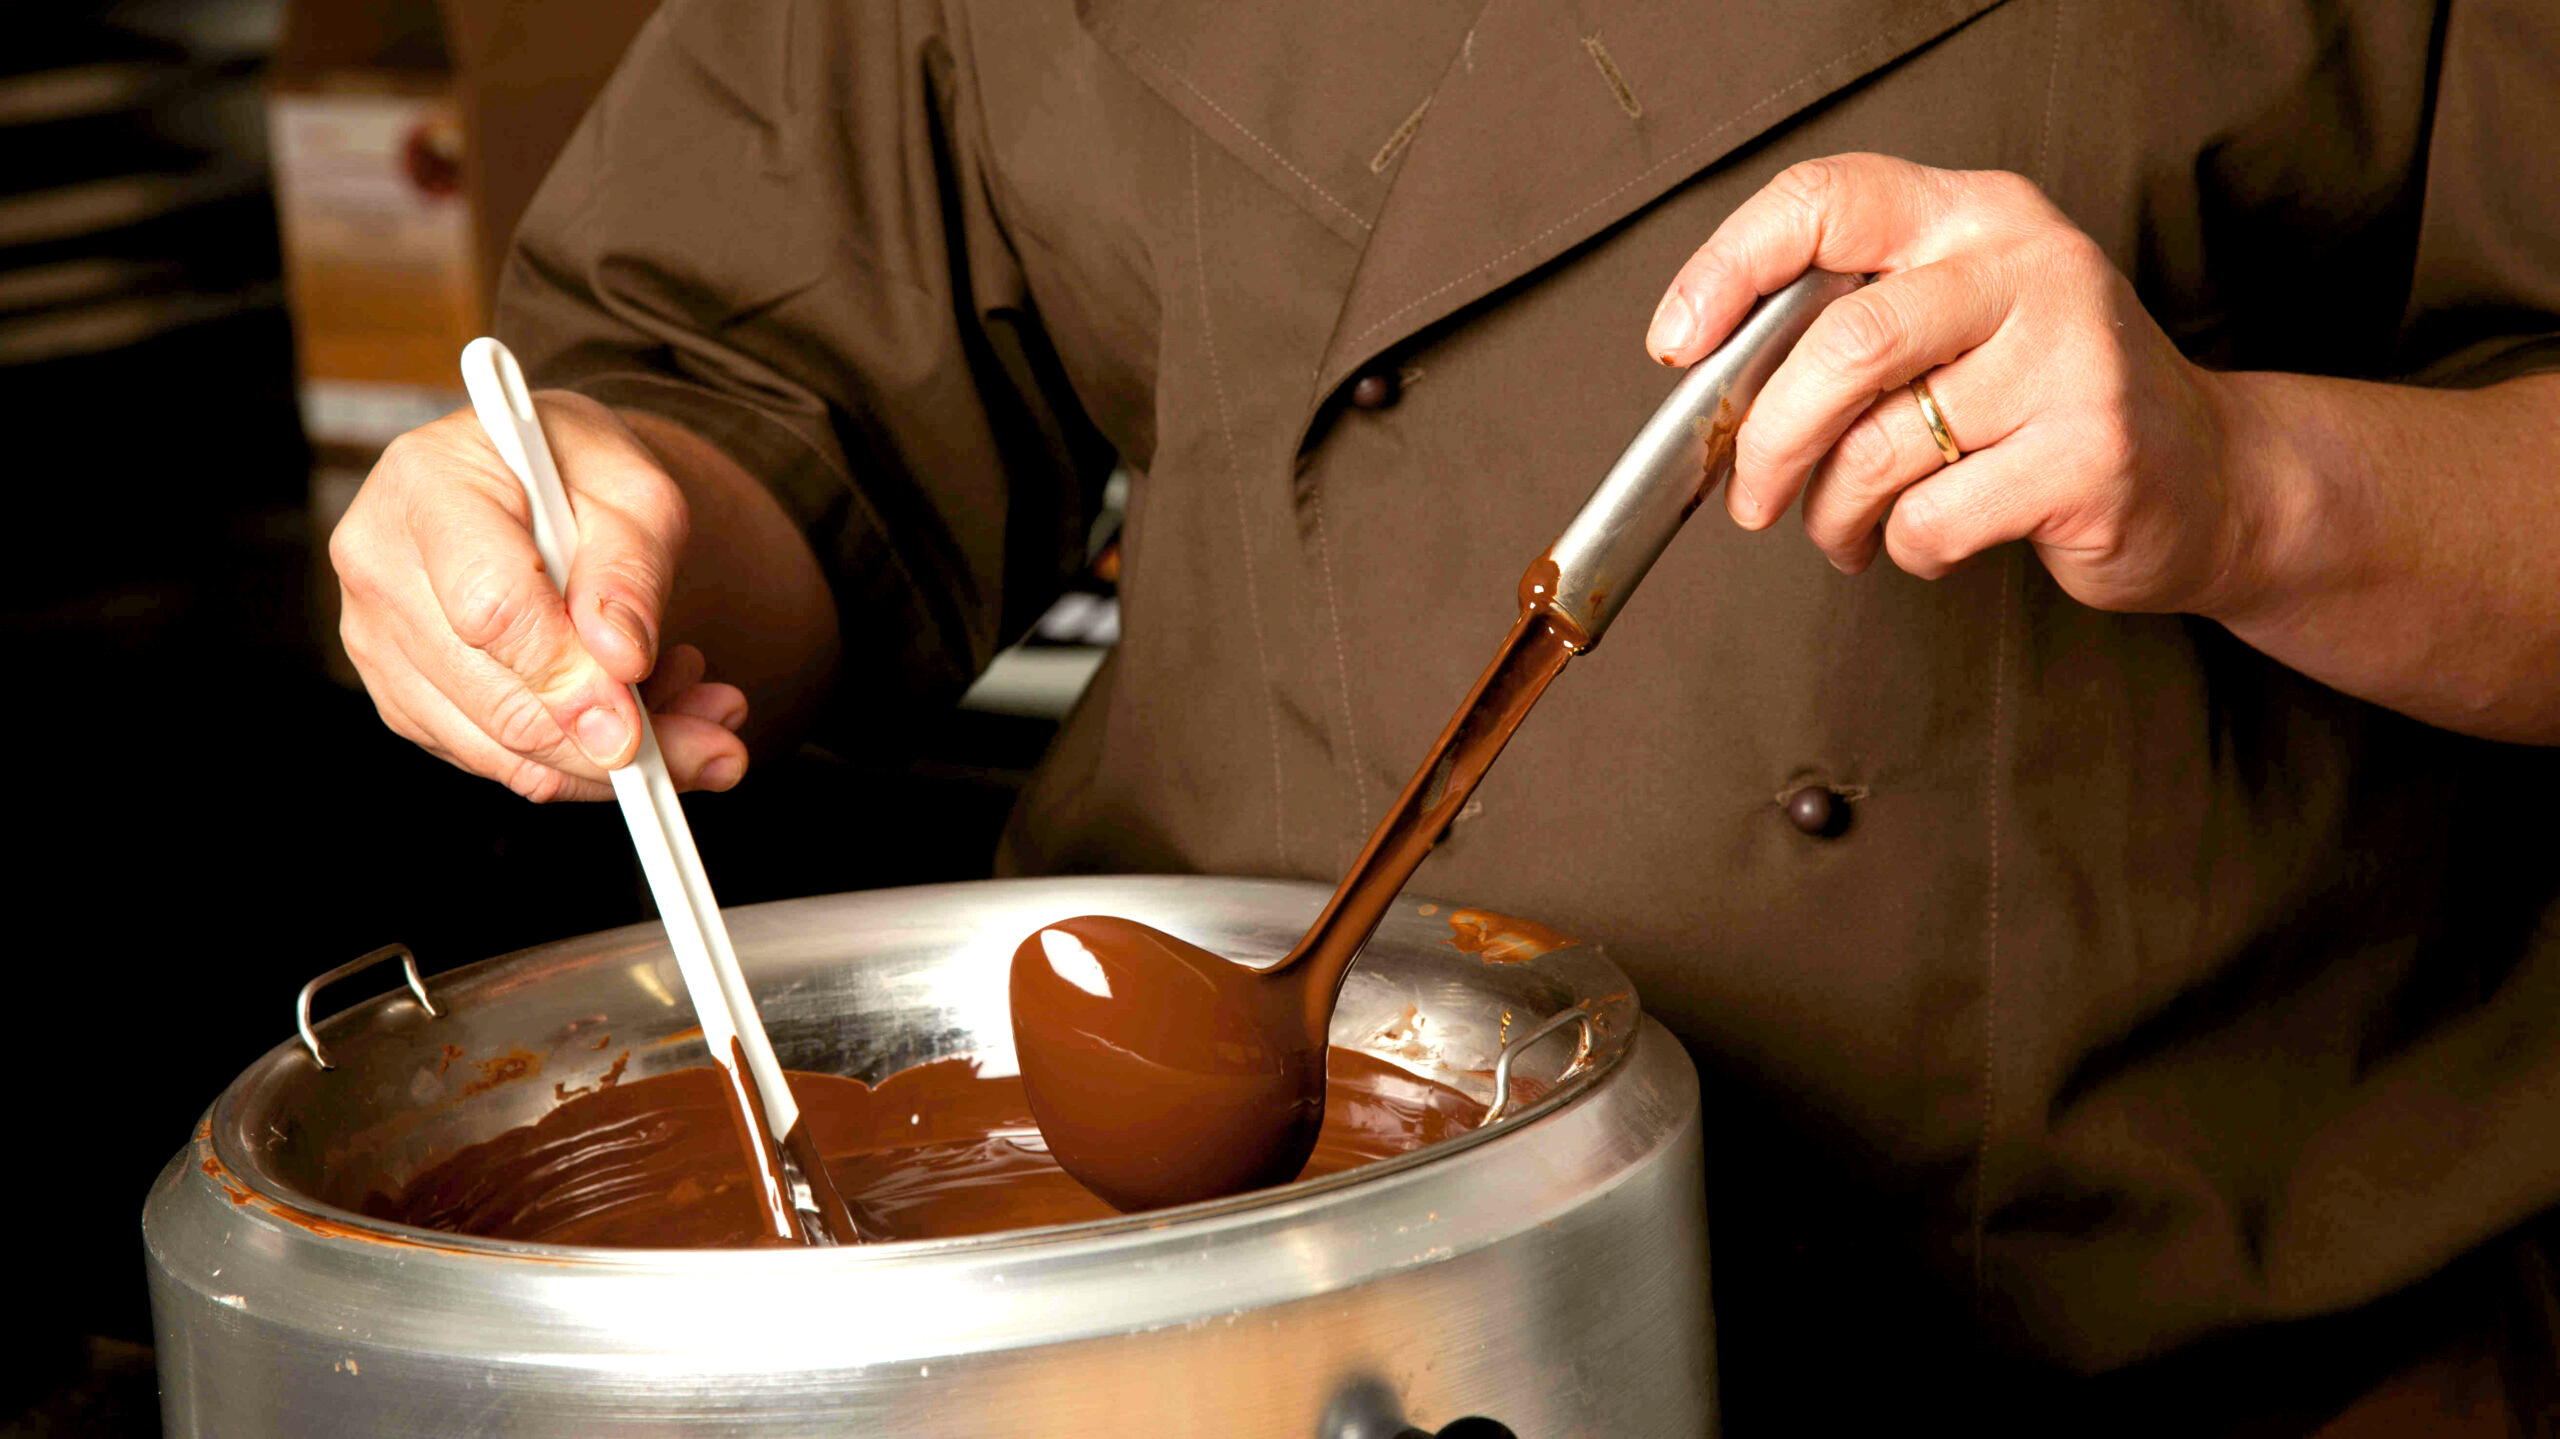 Ateliers de fabrication de chocolat - Choco Chocolat - Chocolaterie  artisanale